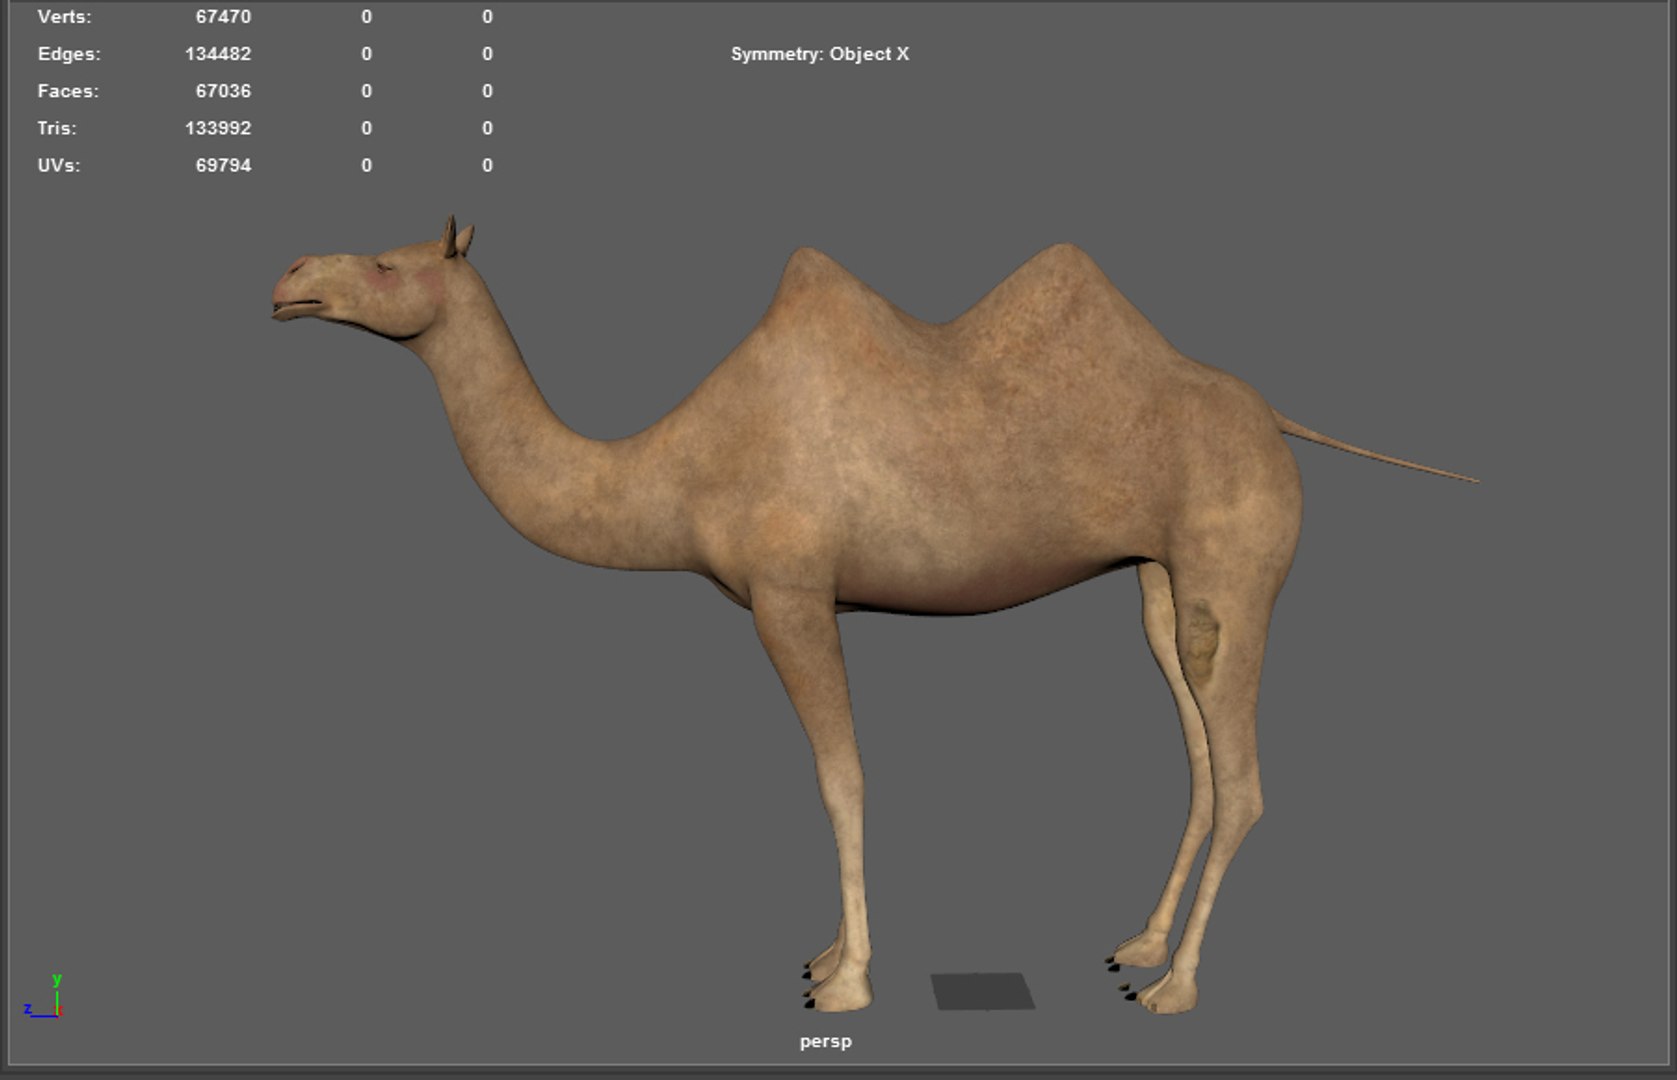 Camel Vr Games 3D Model - TurboSquid 1306396